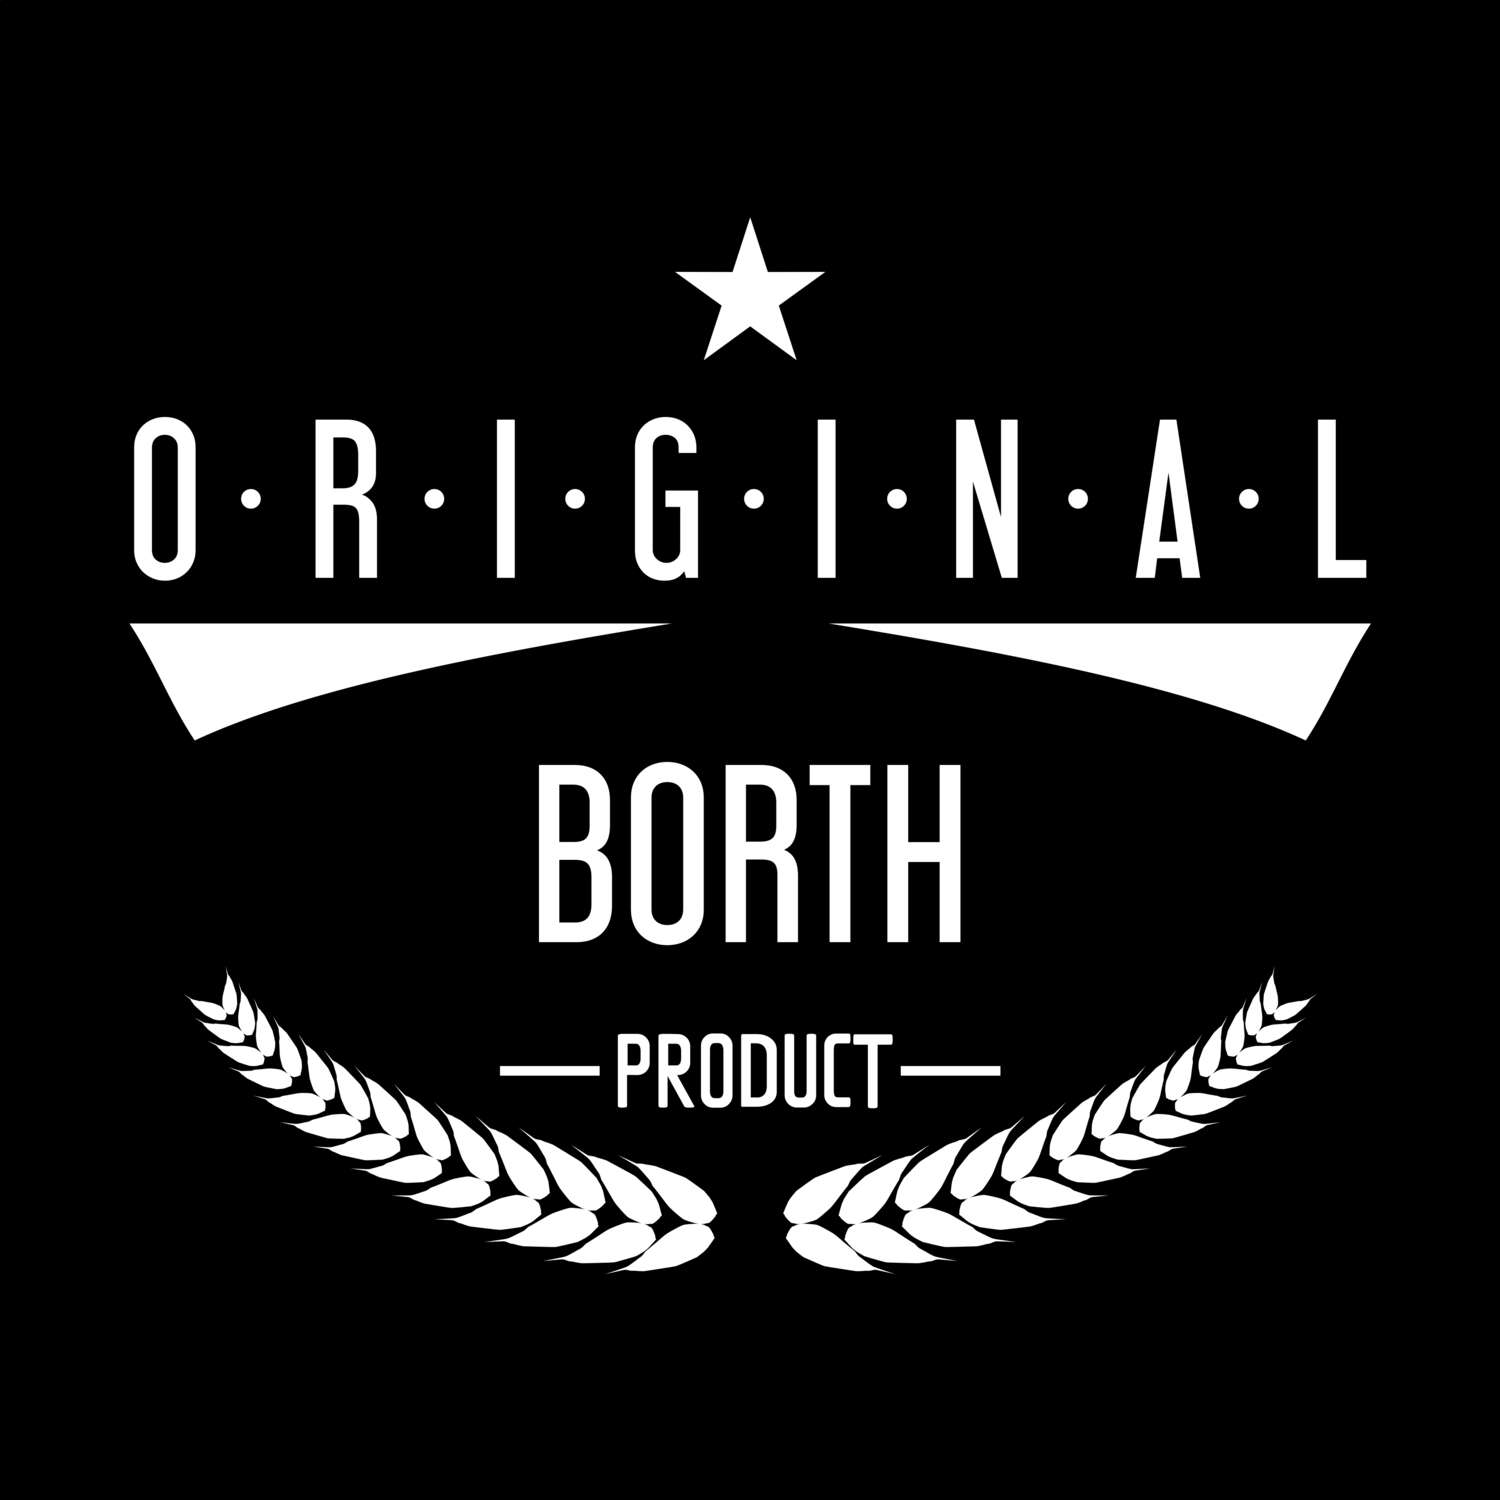 Borth T-Shirt »Original Product«